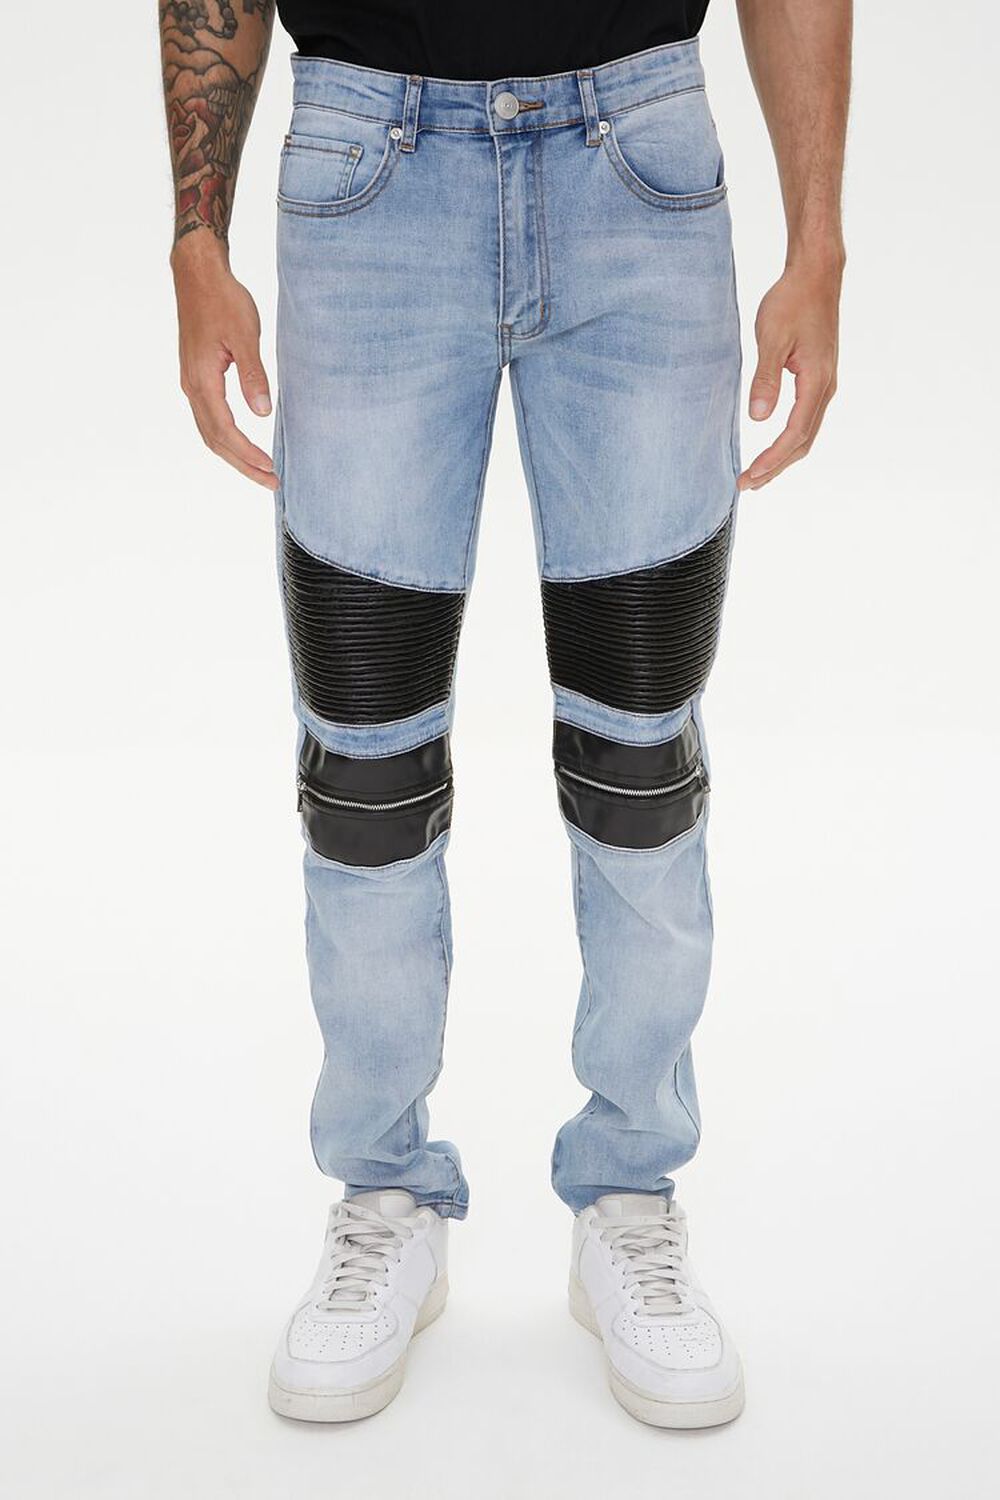 LIGHT DENIM/BLACK Faux Leather & Denim Moto Jeans, image 2